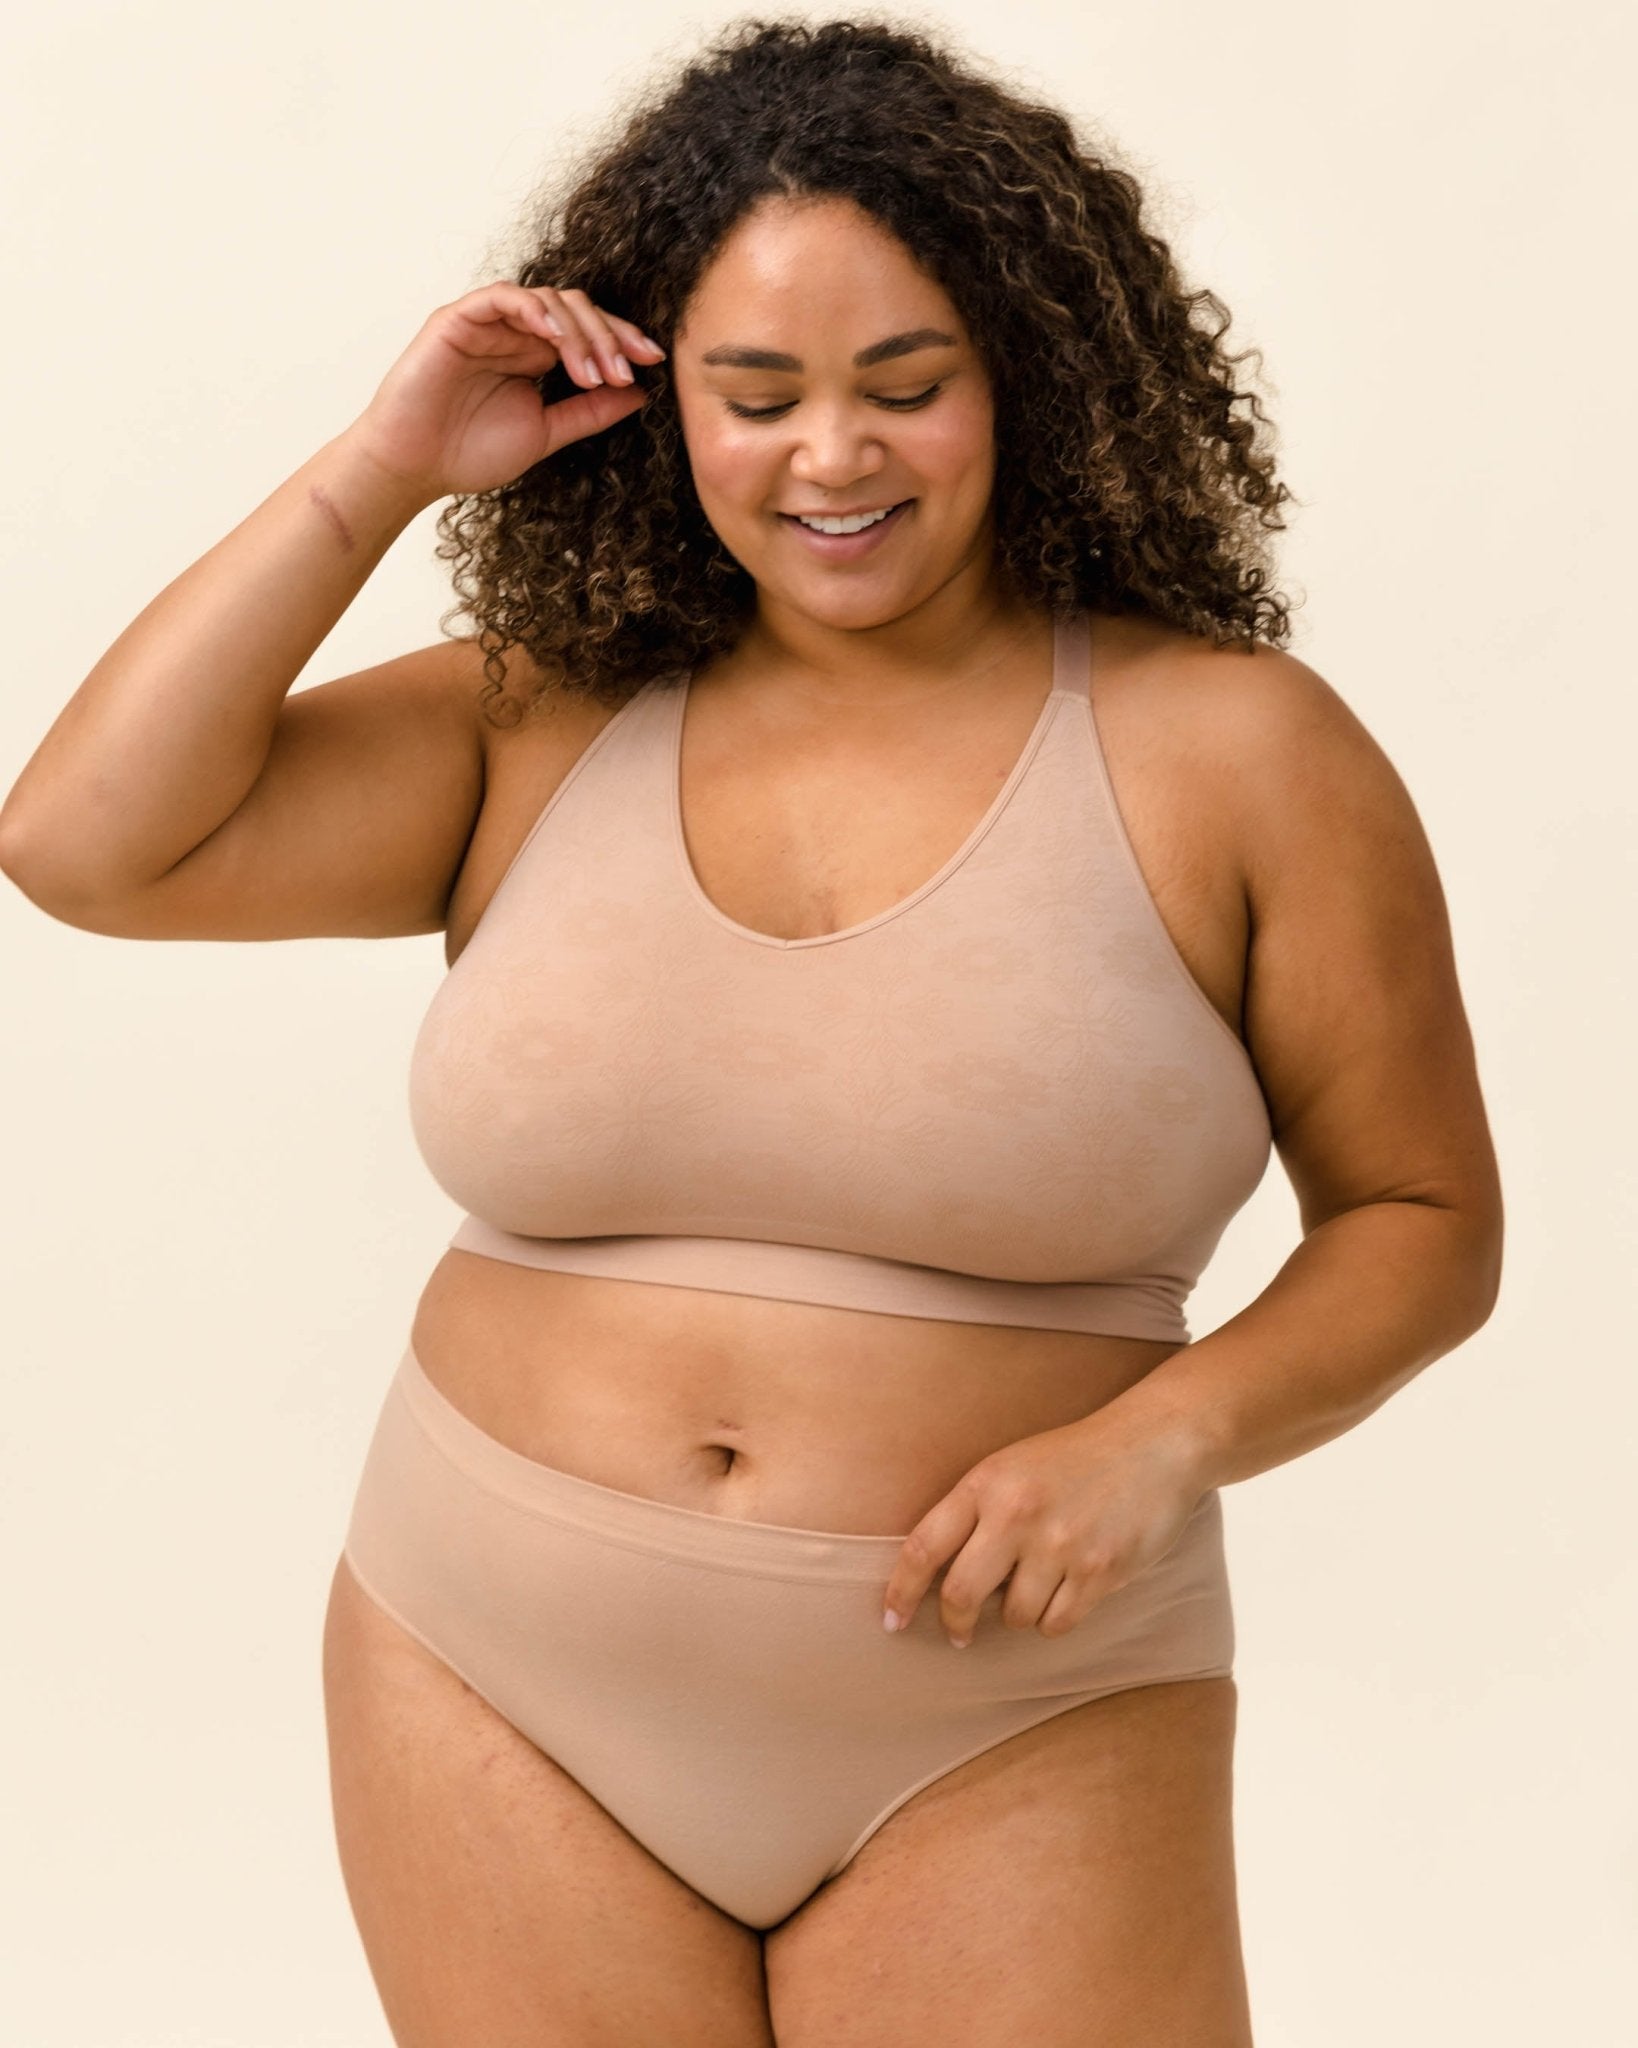 plus size model black bra xxl woman Young beautiful busty curvy Stock Photo